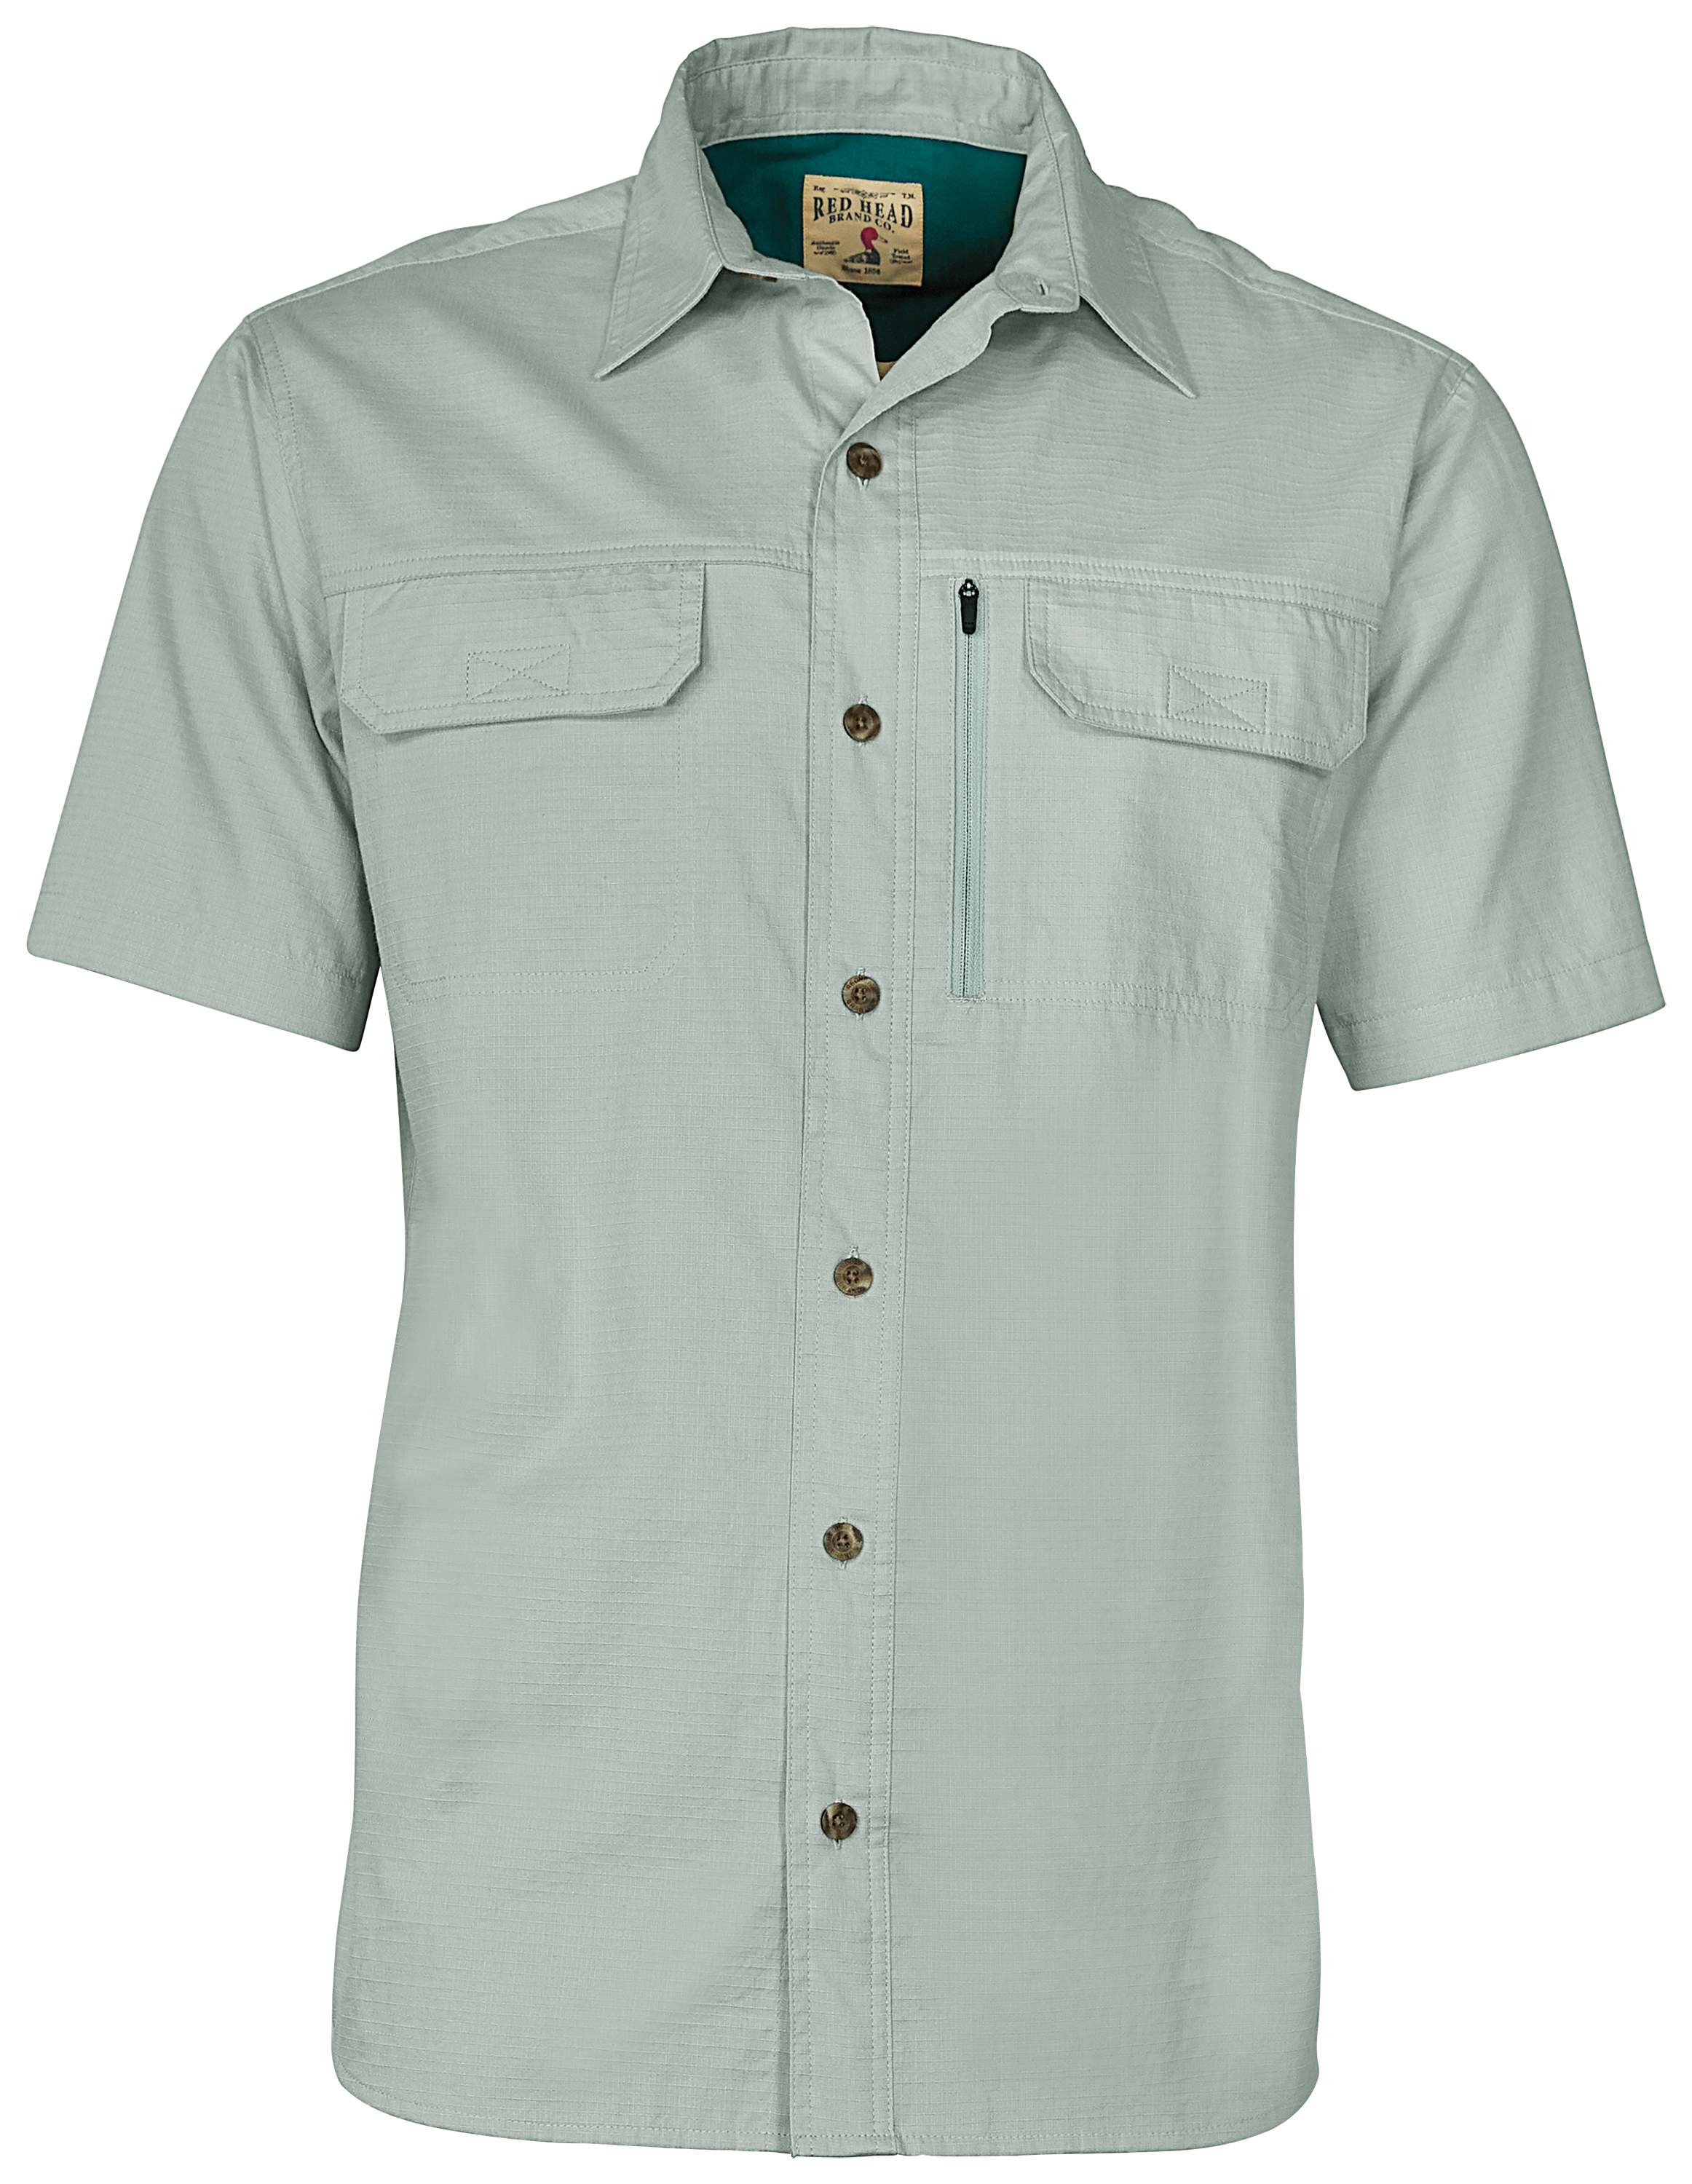 RedHead West Plains Ripstop Short-Sleeve Shirt for Men